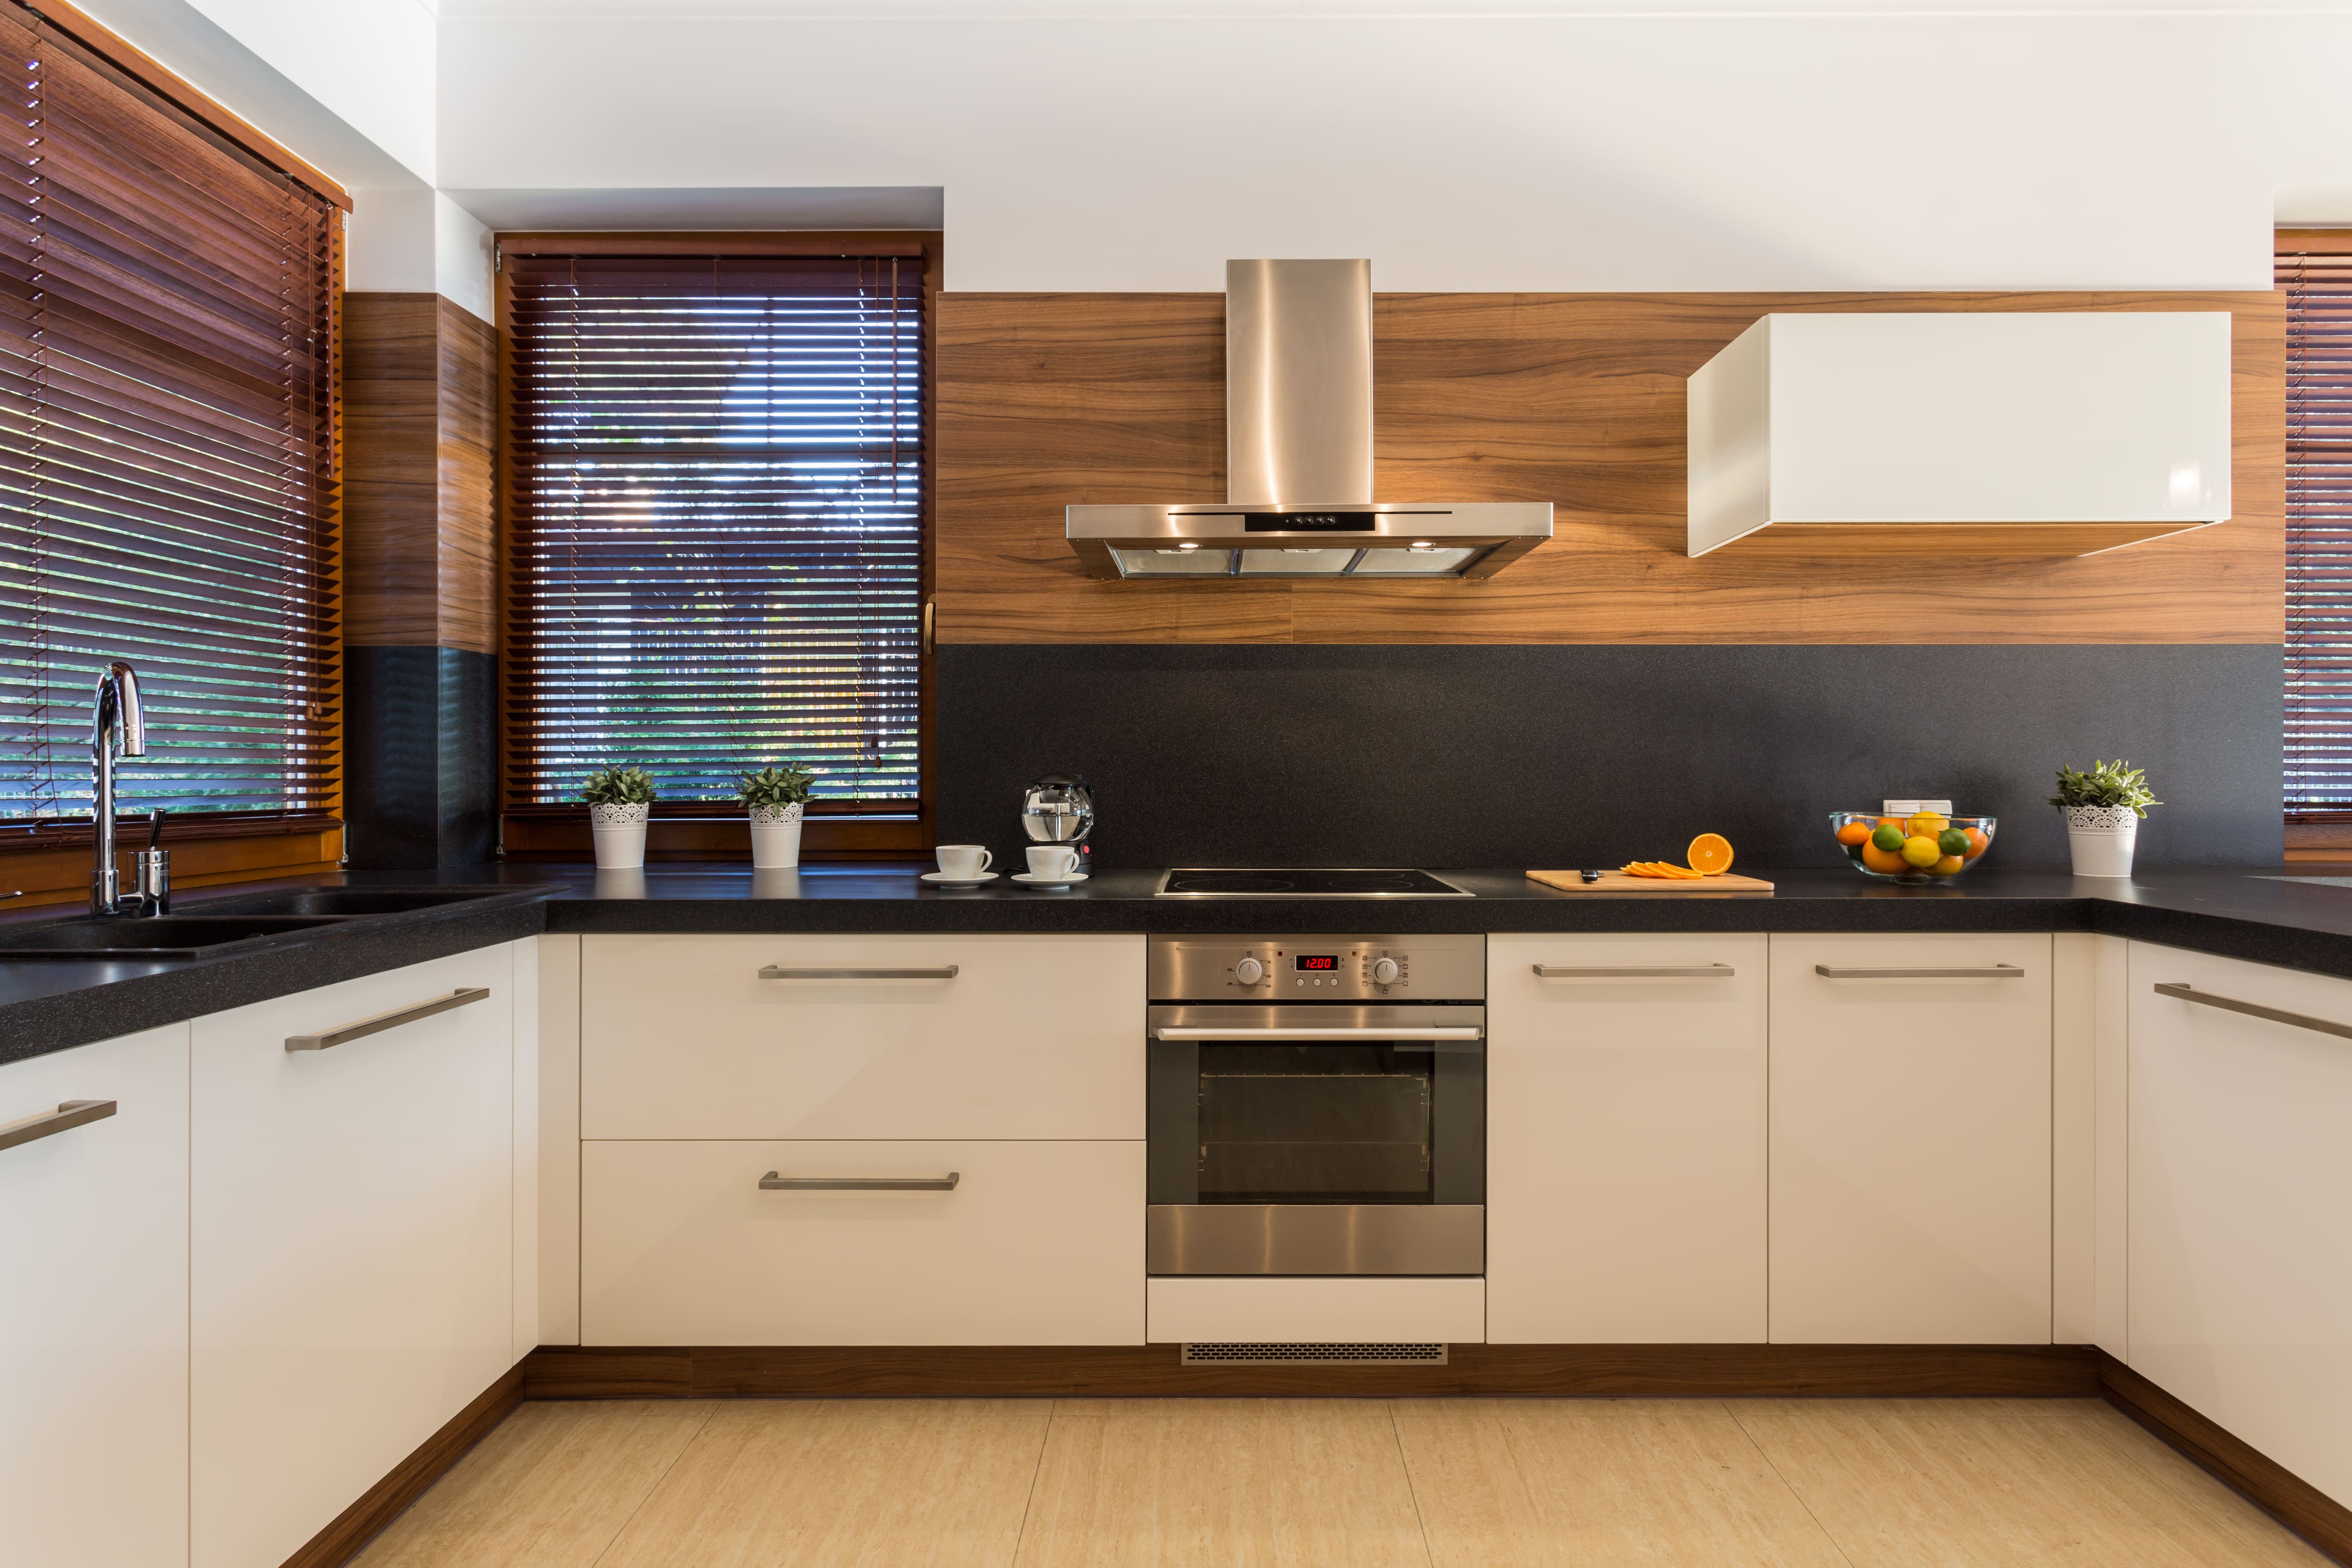 Amazing Contemporary Home Modular Kitchen Interior Designs